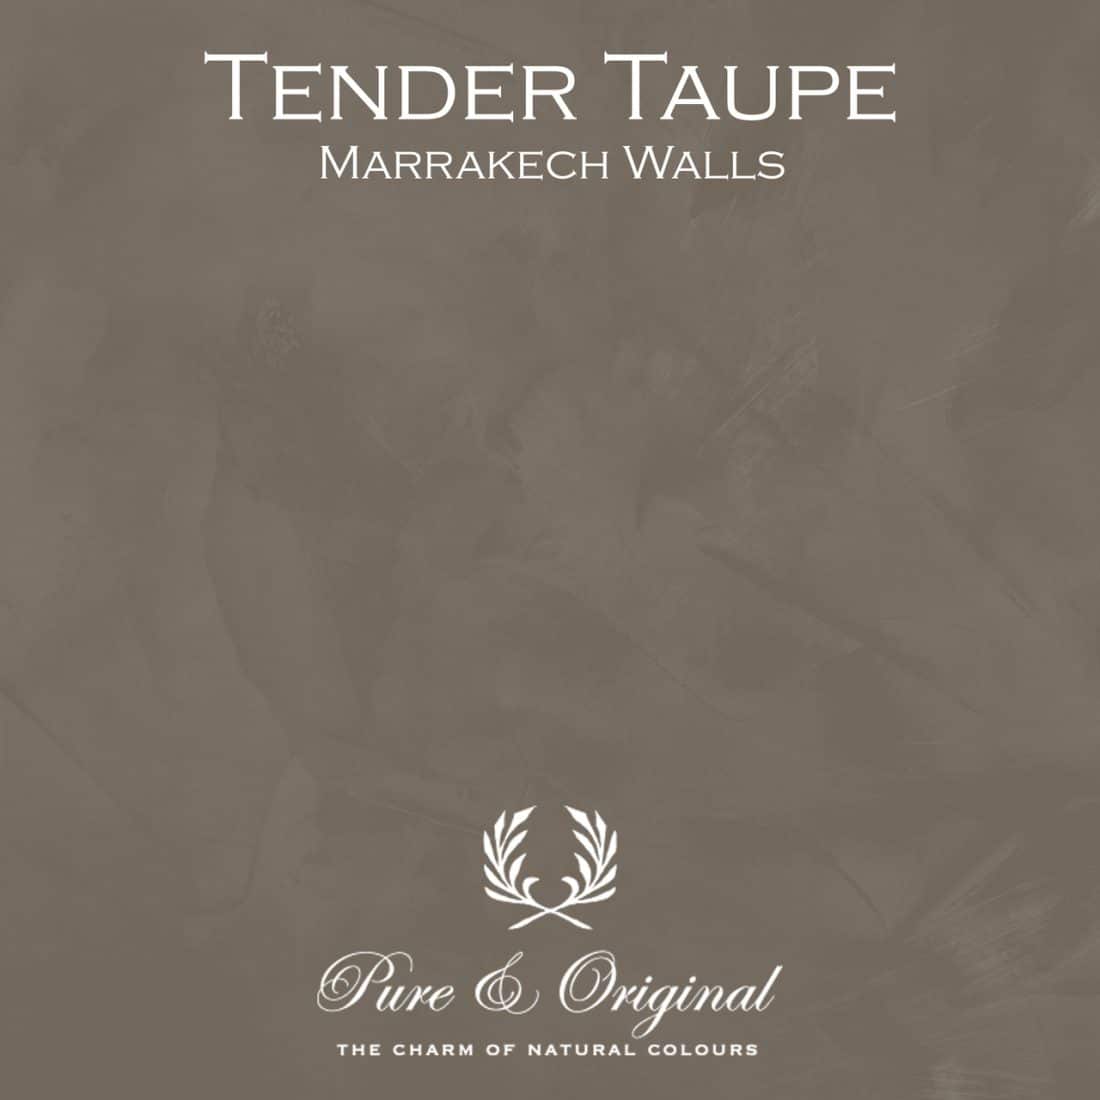 Tender Taupe Marrakech Walls Pure Original